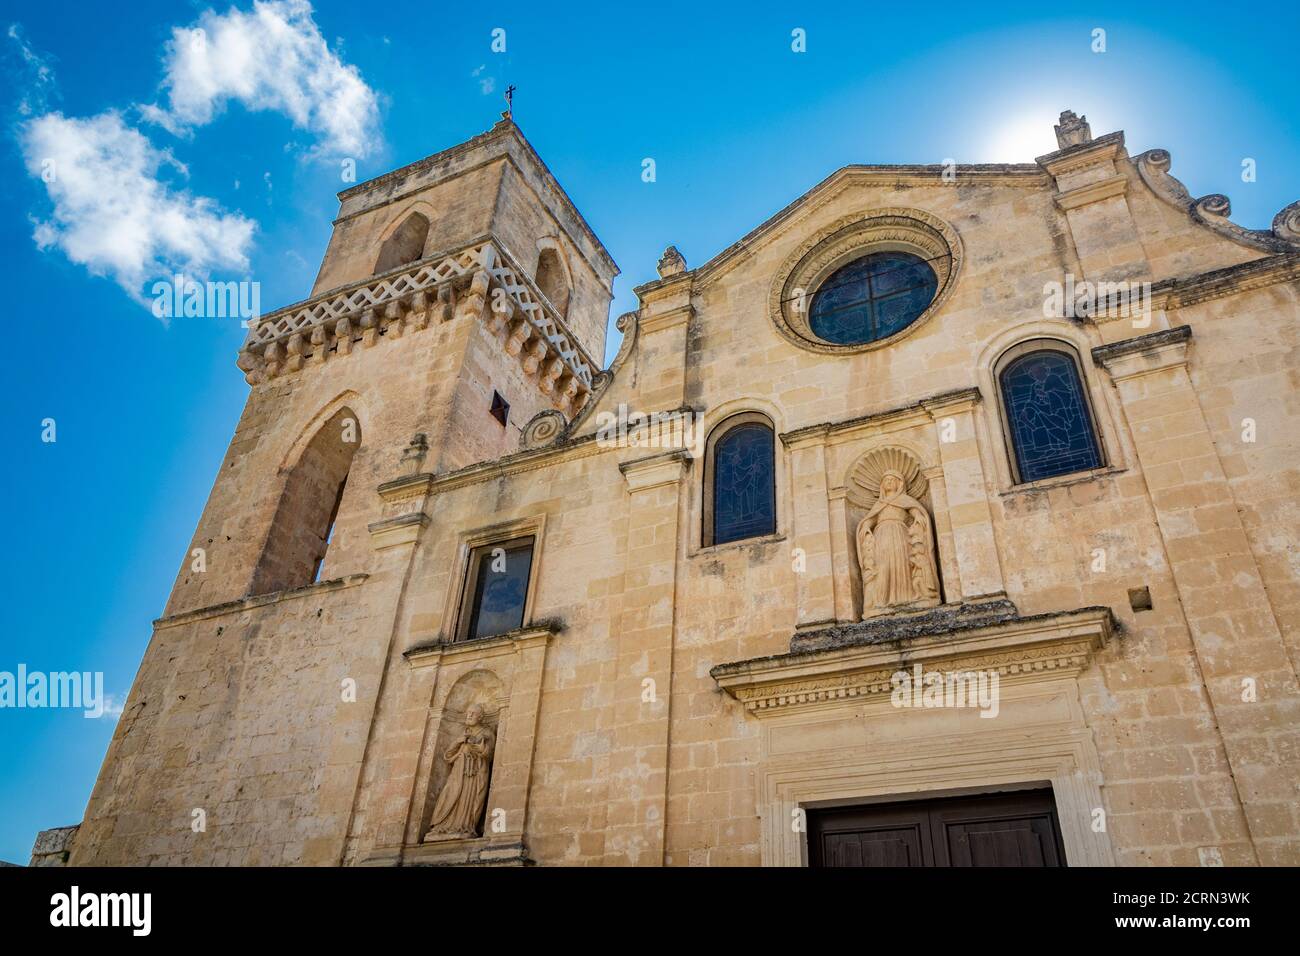 August 8, 2020 - Matera, Basilicata, Italy - The ancient Church of San Pietro Caveoso, in Baroque style, in the Sasso Caveoso. Stock Photo